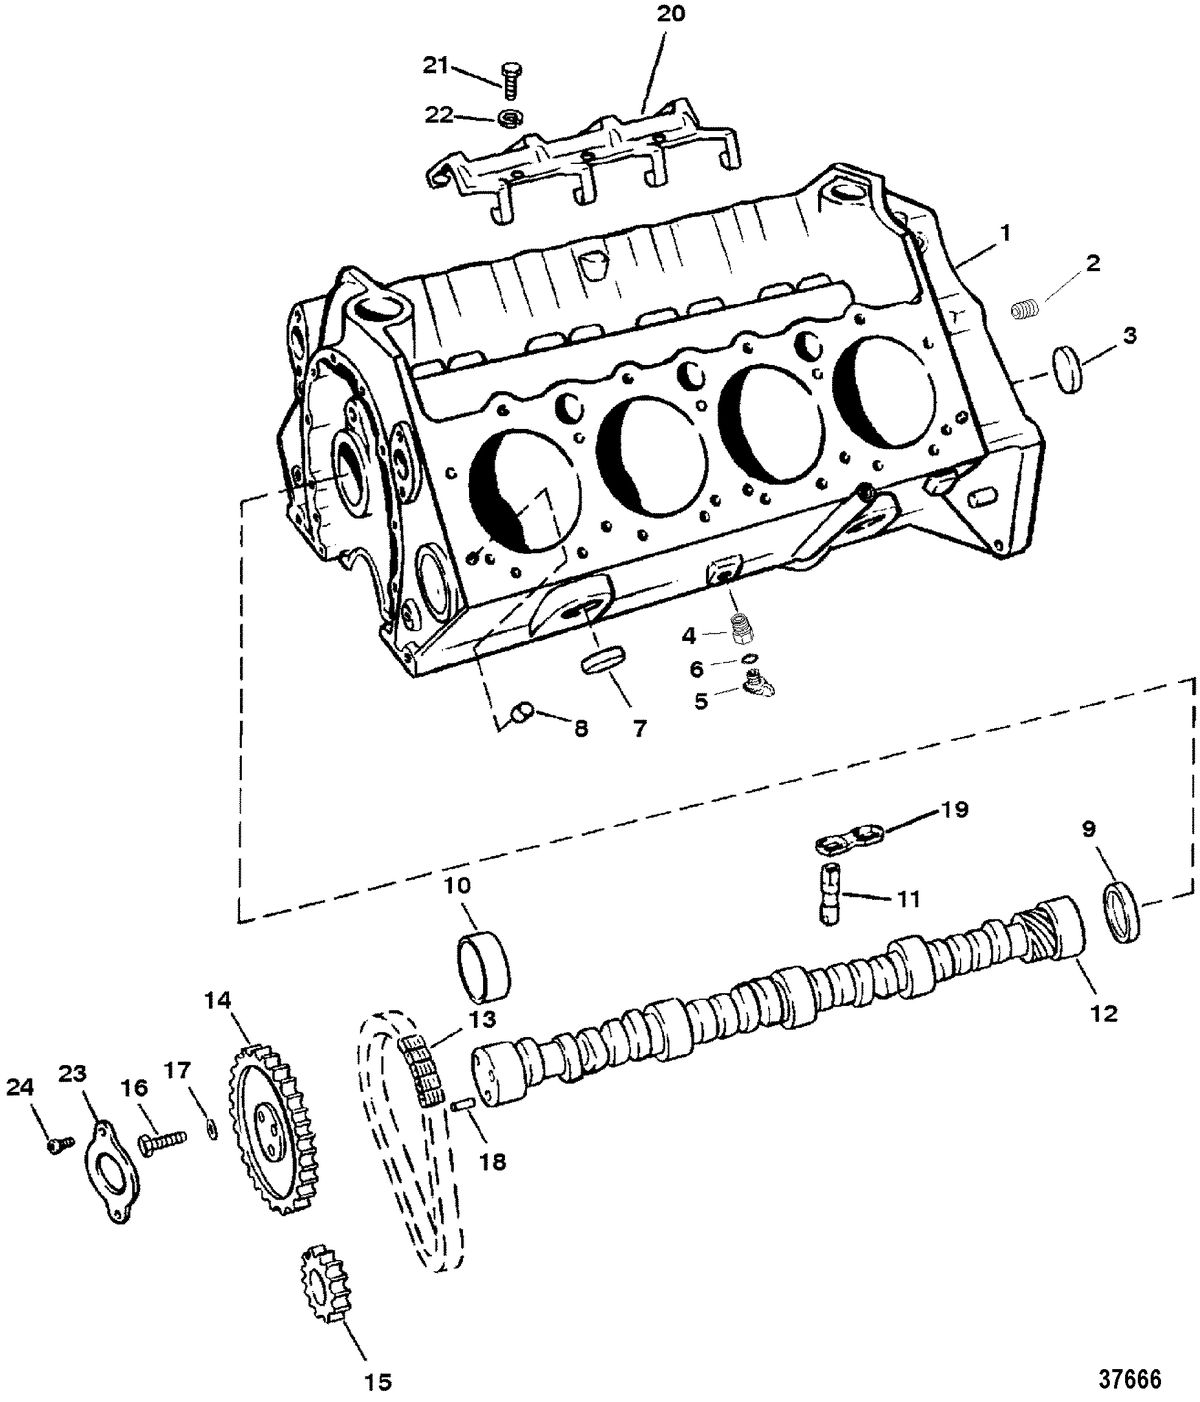 MERCRUISER 5.7L COMPETITION SKI ENGINE CYLINDER BLOCK AND CAMSHAFT(350 C.I.D. ROLLER LIFTERS)